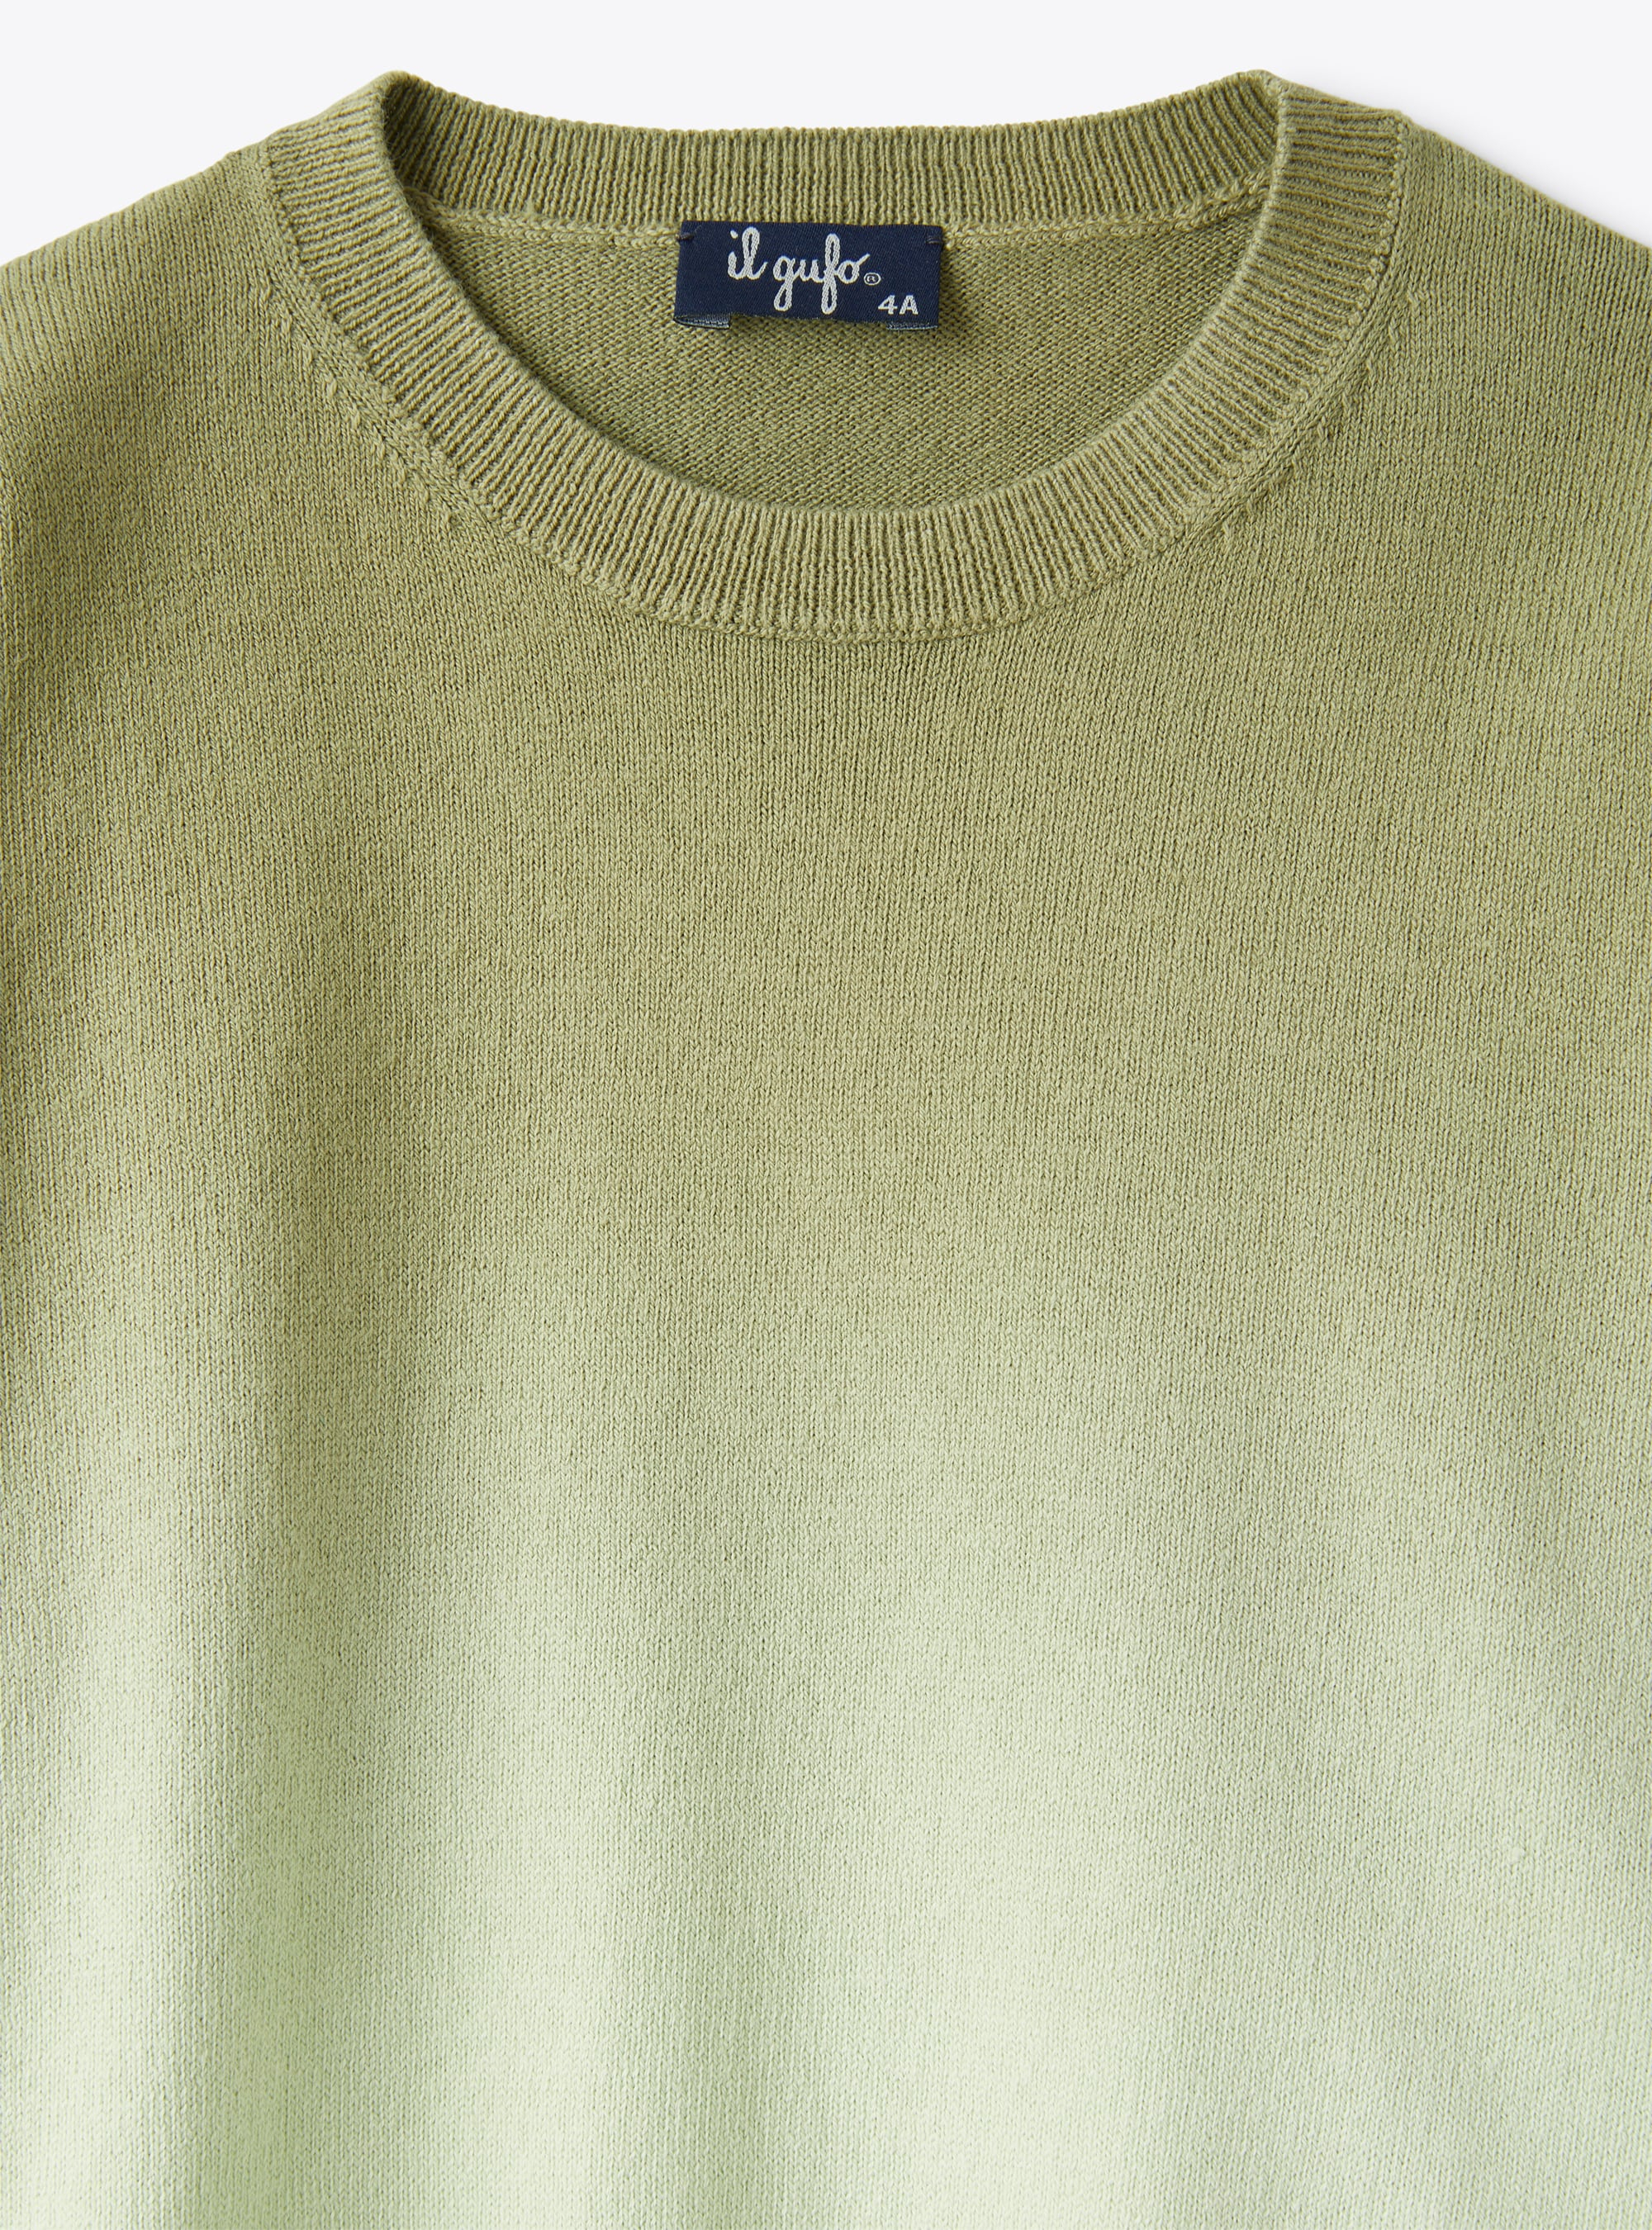 Sweater in sage-green organic cotton - Green | Il Gufo